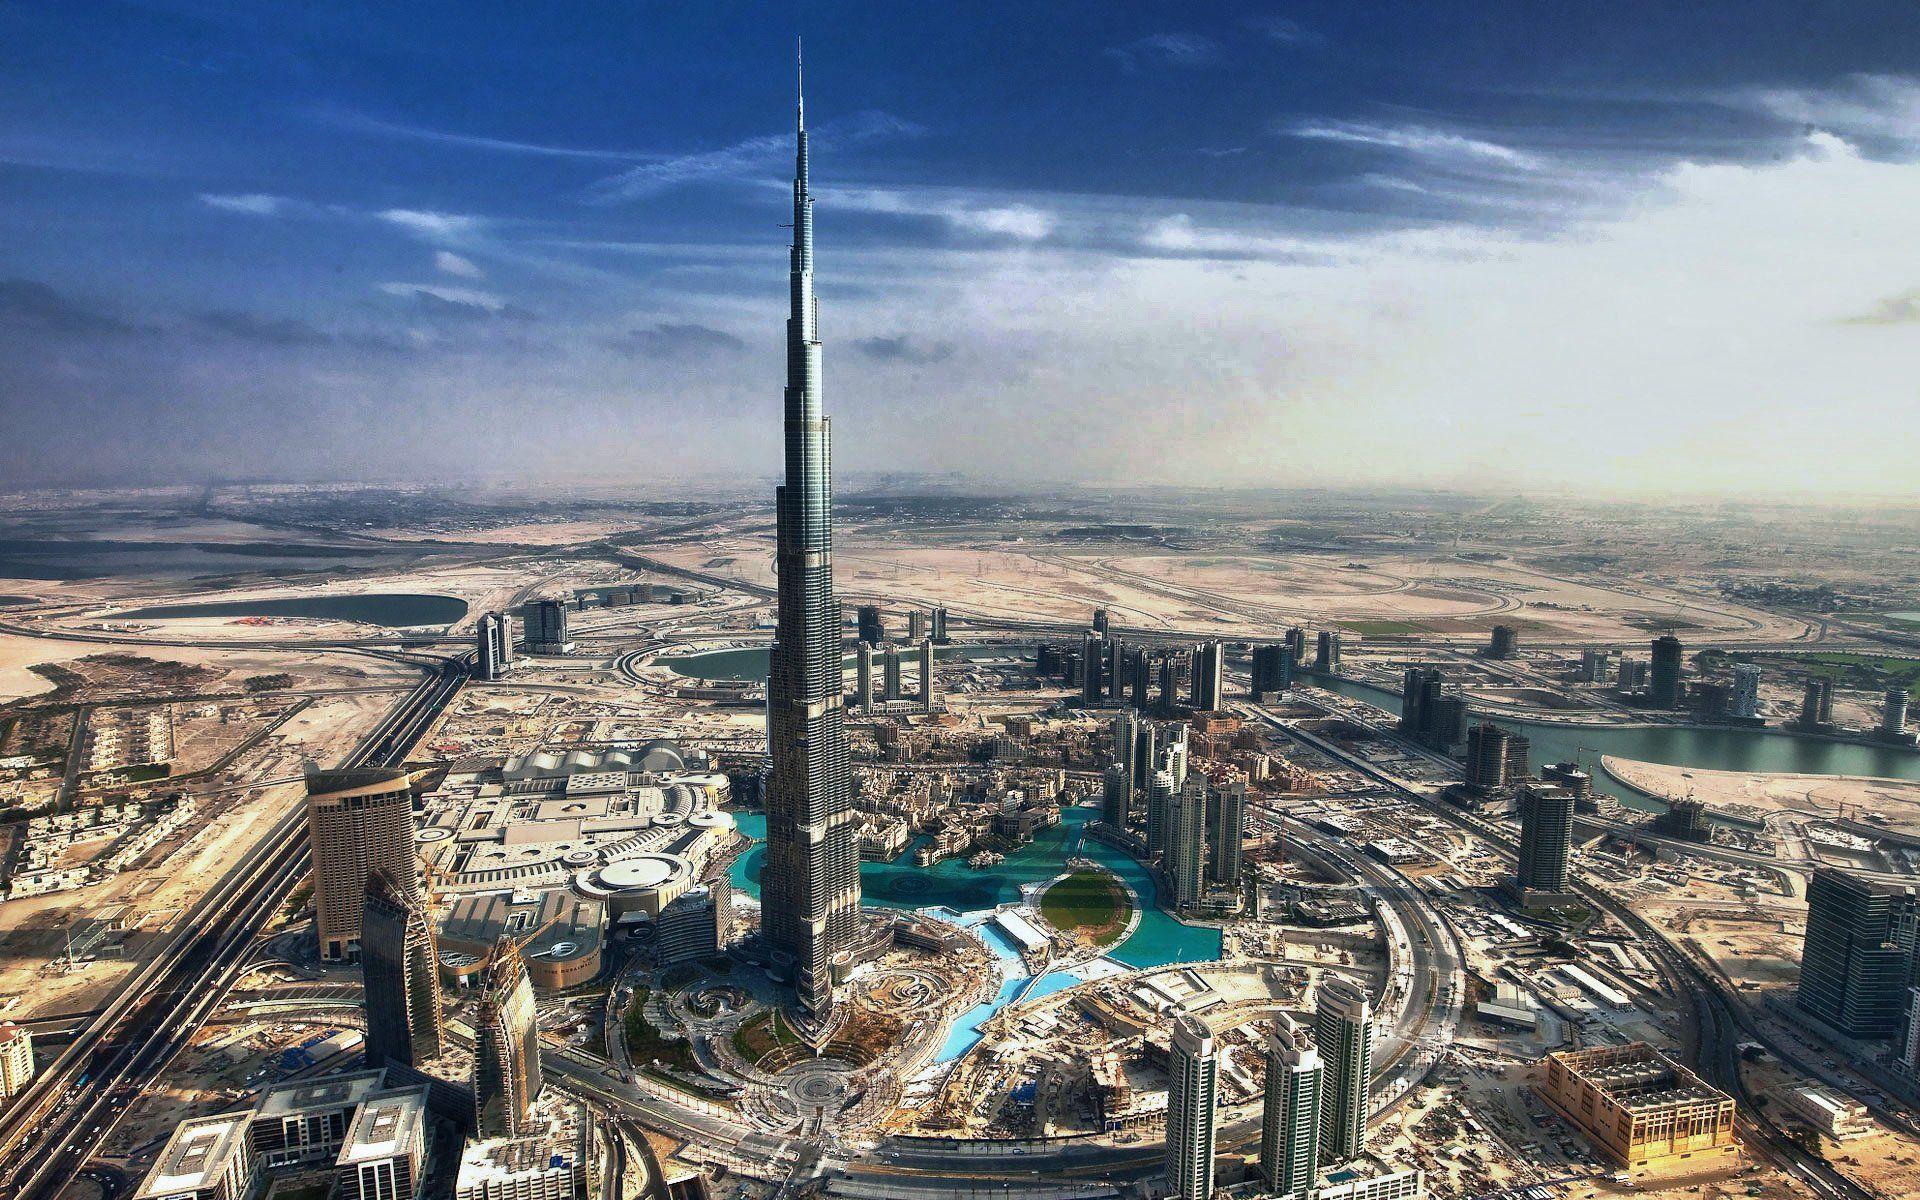 Burj Khalifa Wallpaper Image Photo Picture Background